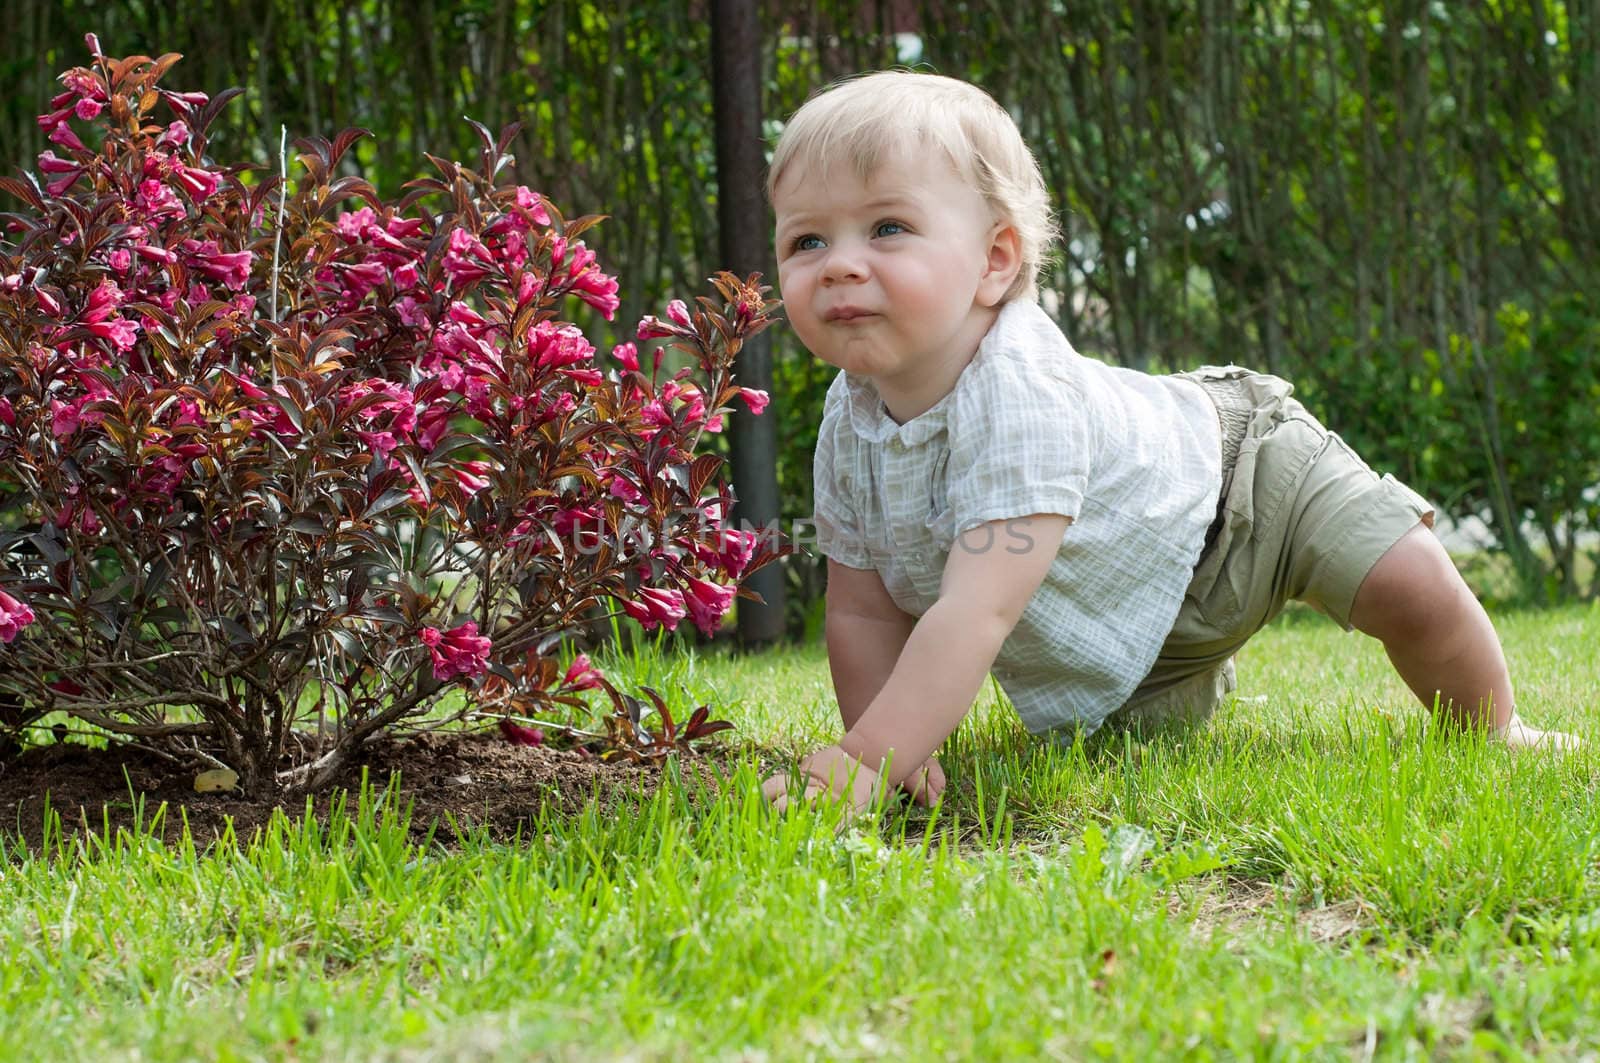 Little baby boy sitting nea pink bush